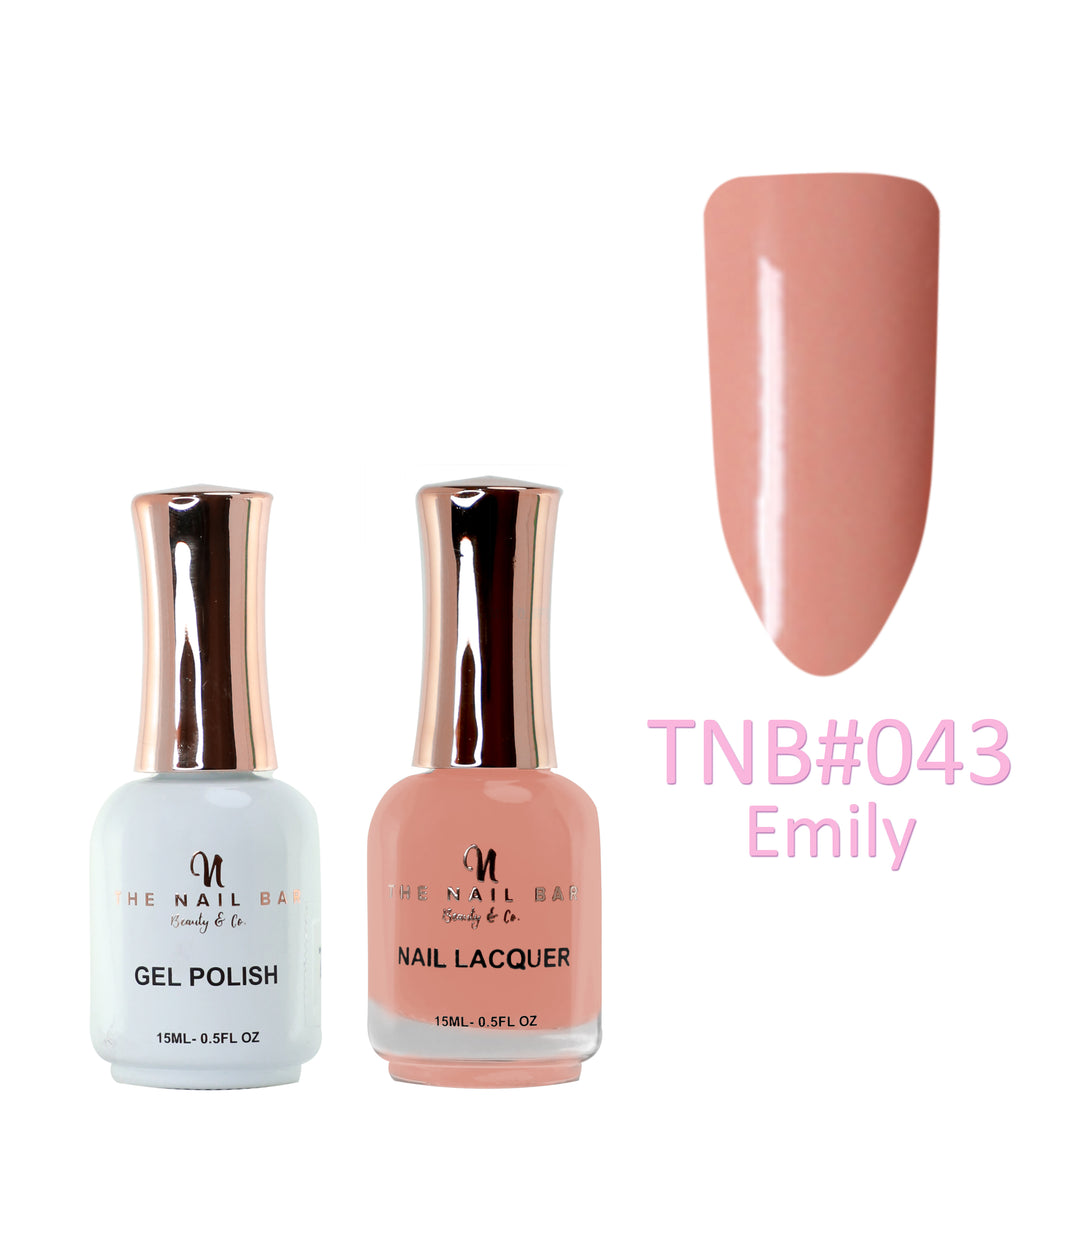 Dual Polish/Gel colour matching (15ml) - Emily - The Nail Bar Beauty & Co.